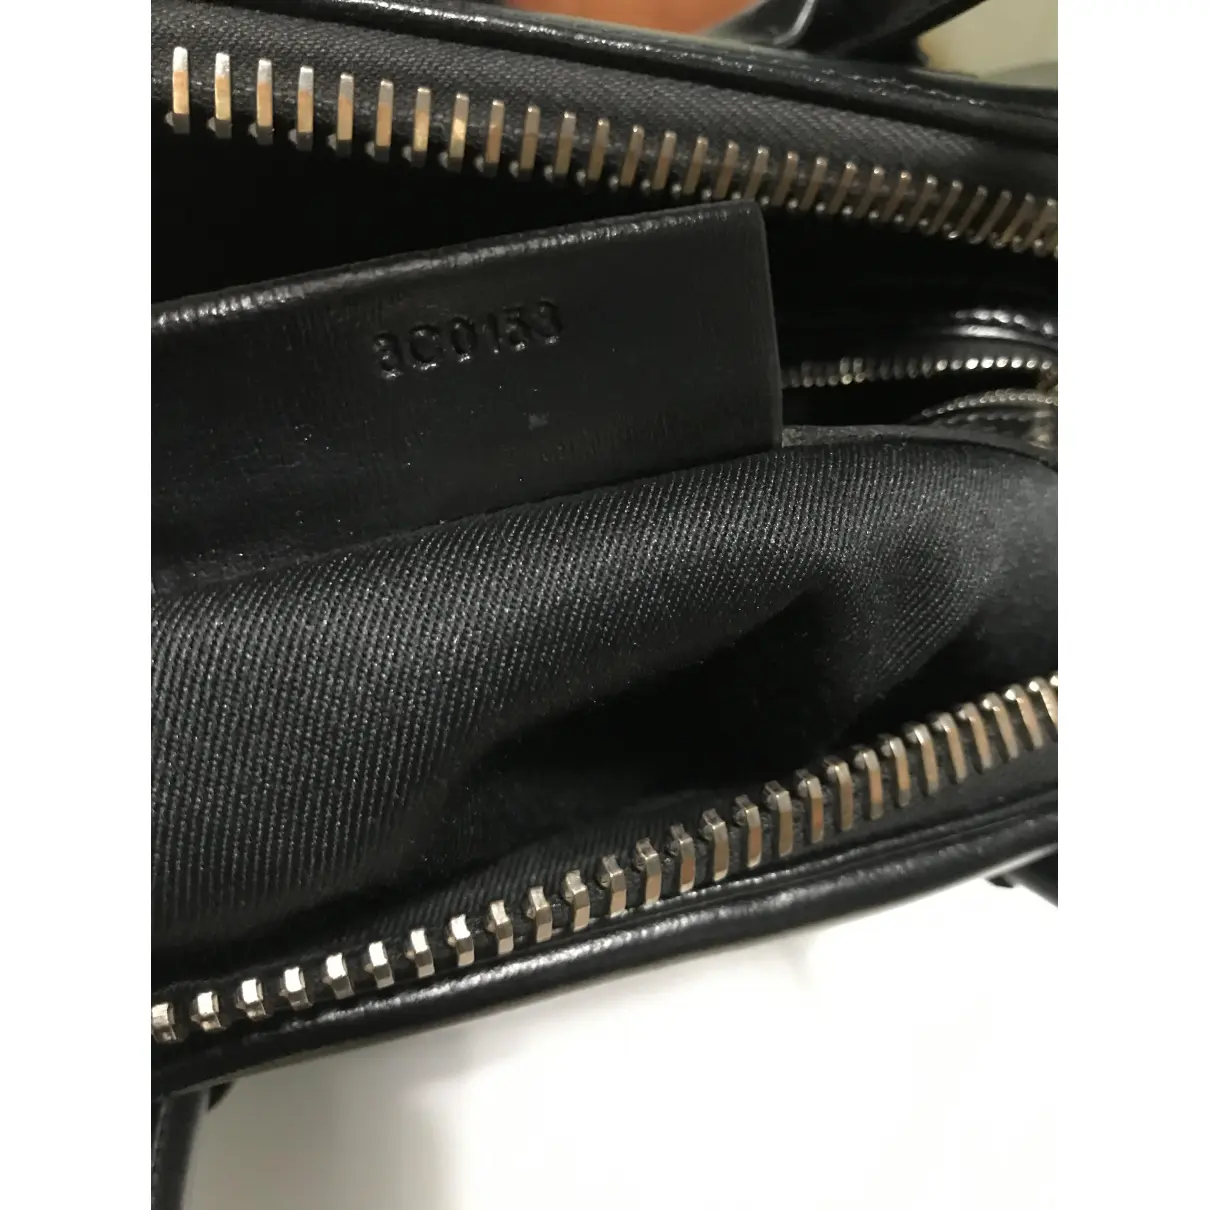 Buy Givenchy Antigona leather handbag online